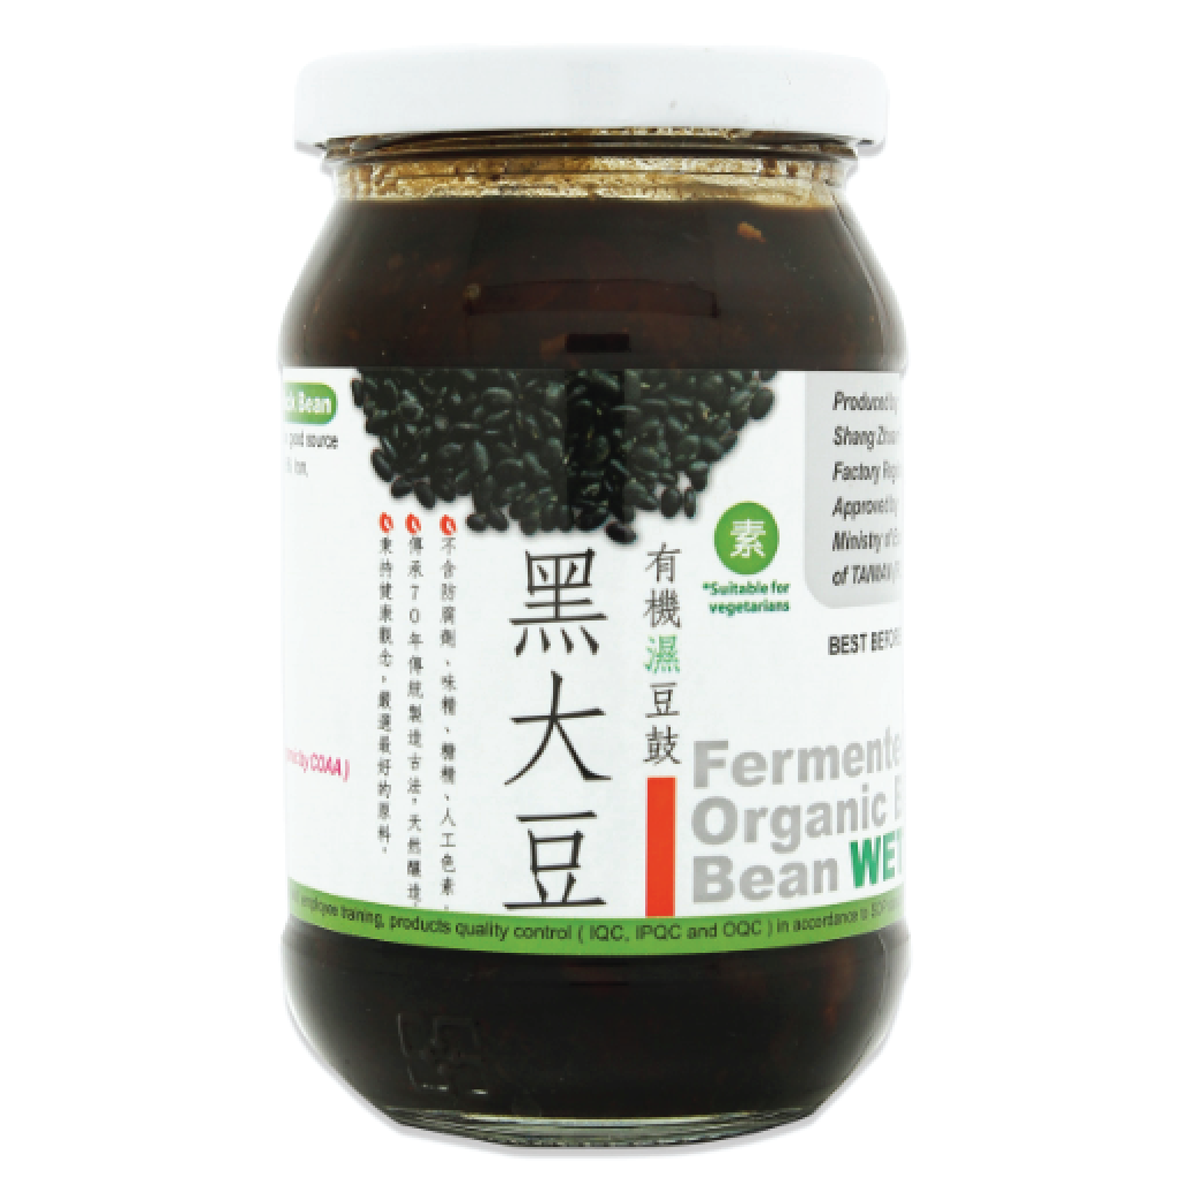 Organic Black Bean Wet
Fermented (400ML)